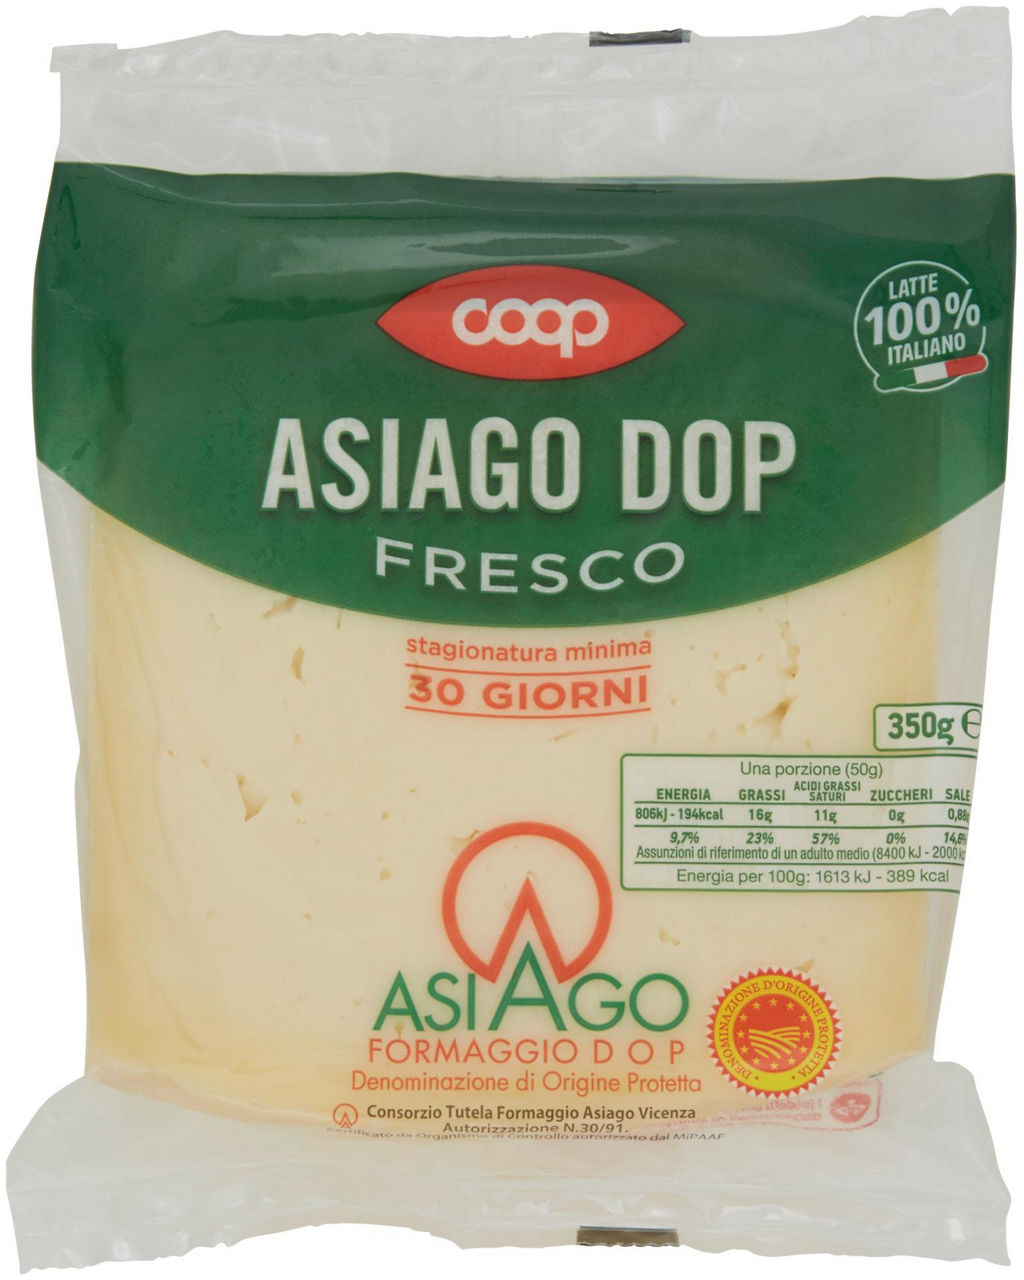 Formaggio asiago dop fresco coop g 350